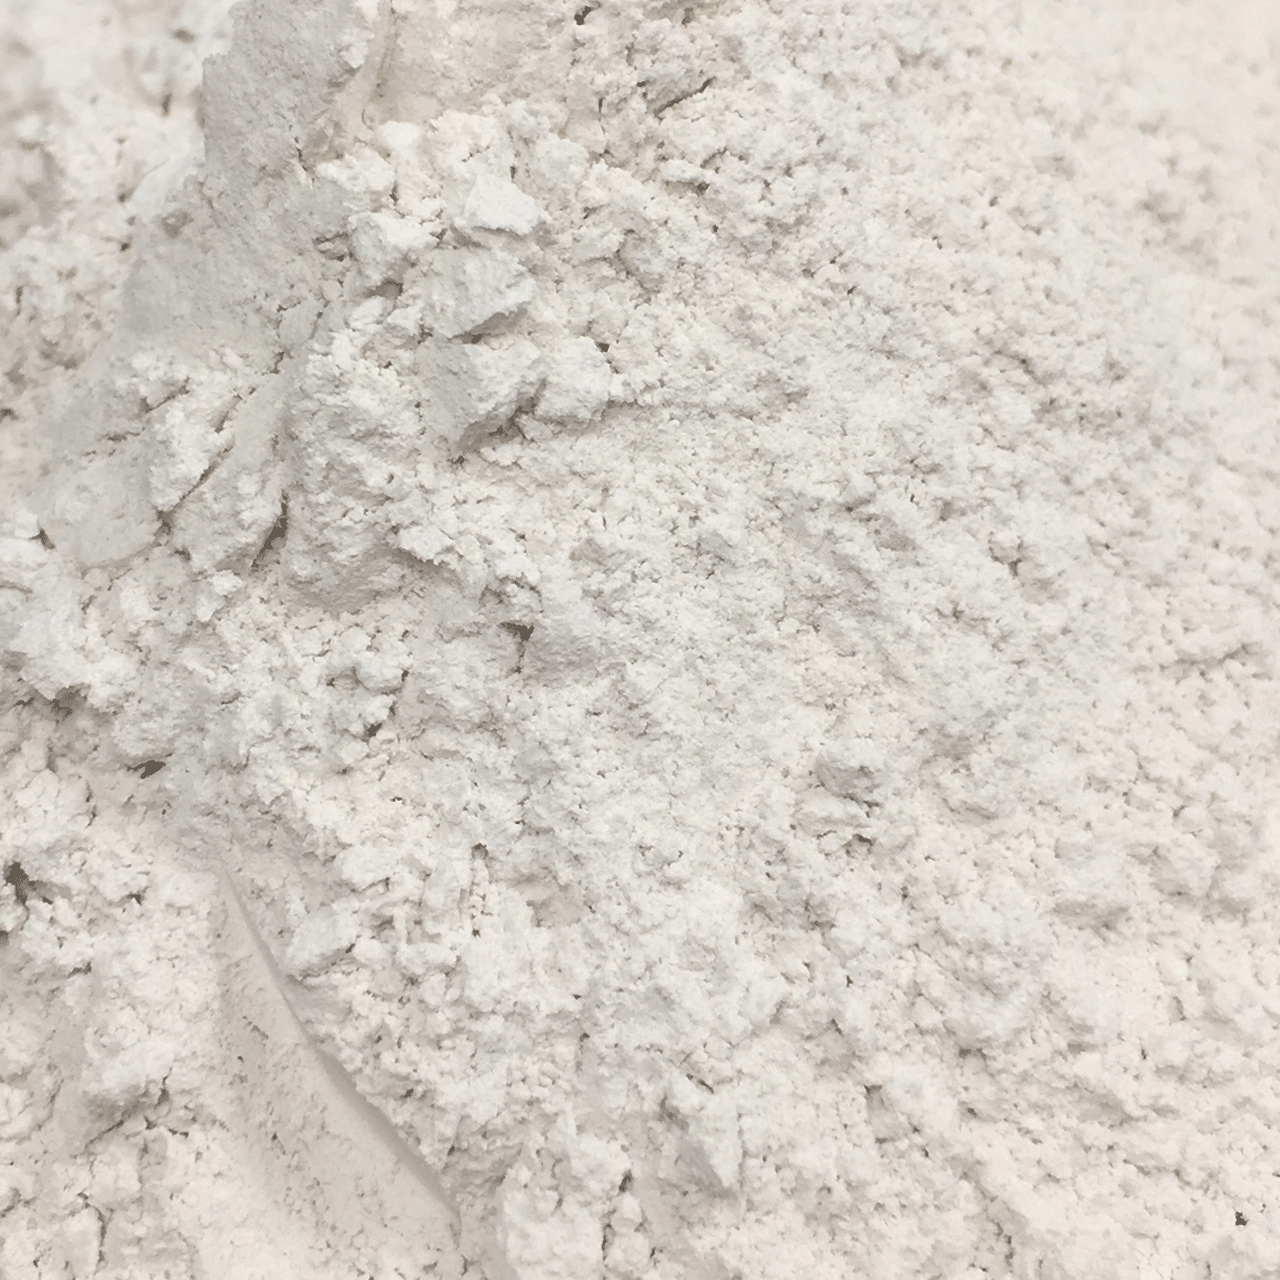 Zircon flour